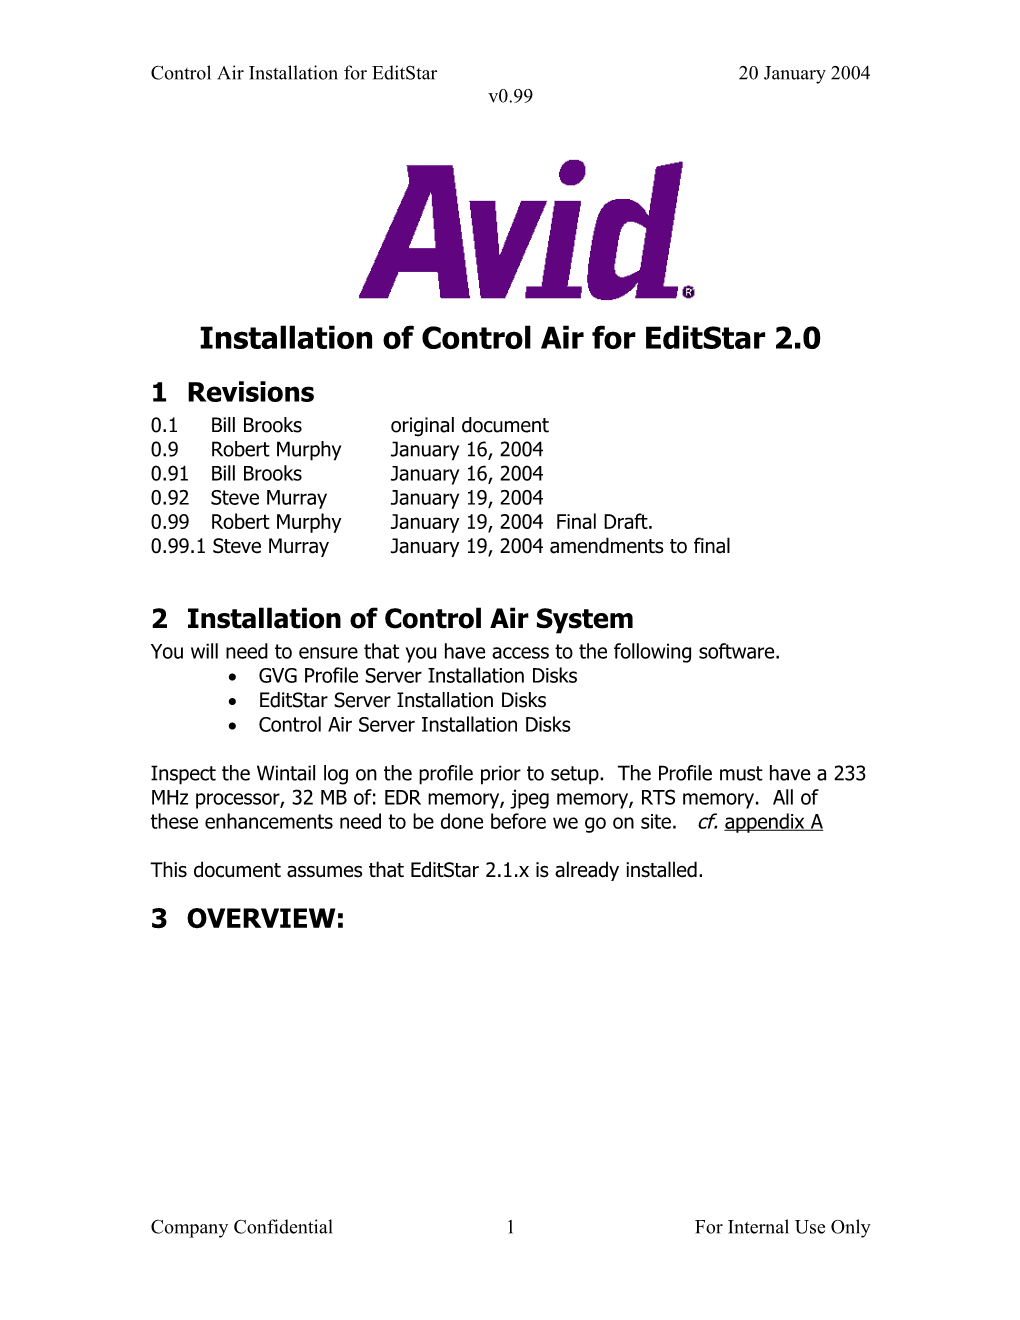 Installation of Control Air for Editstar 2.0